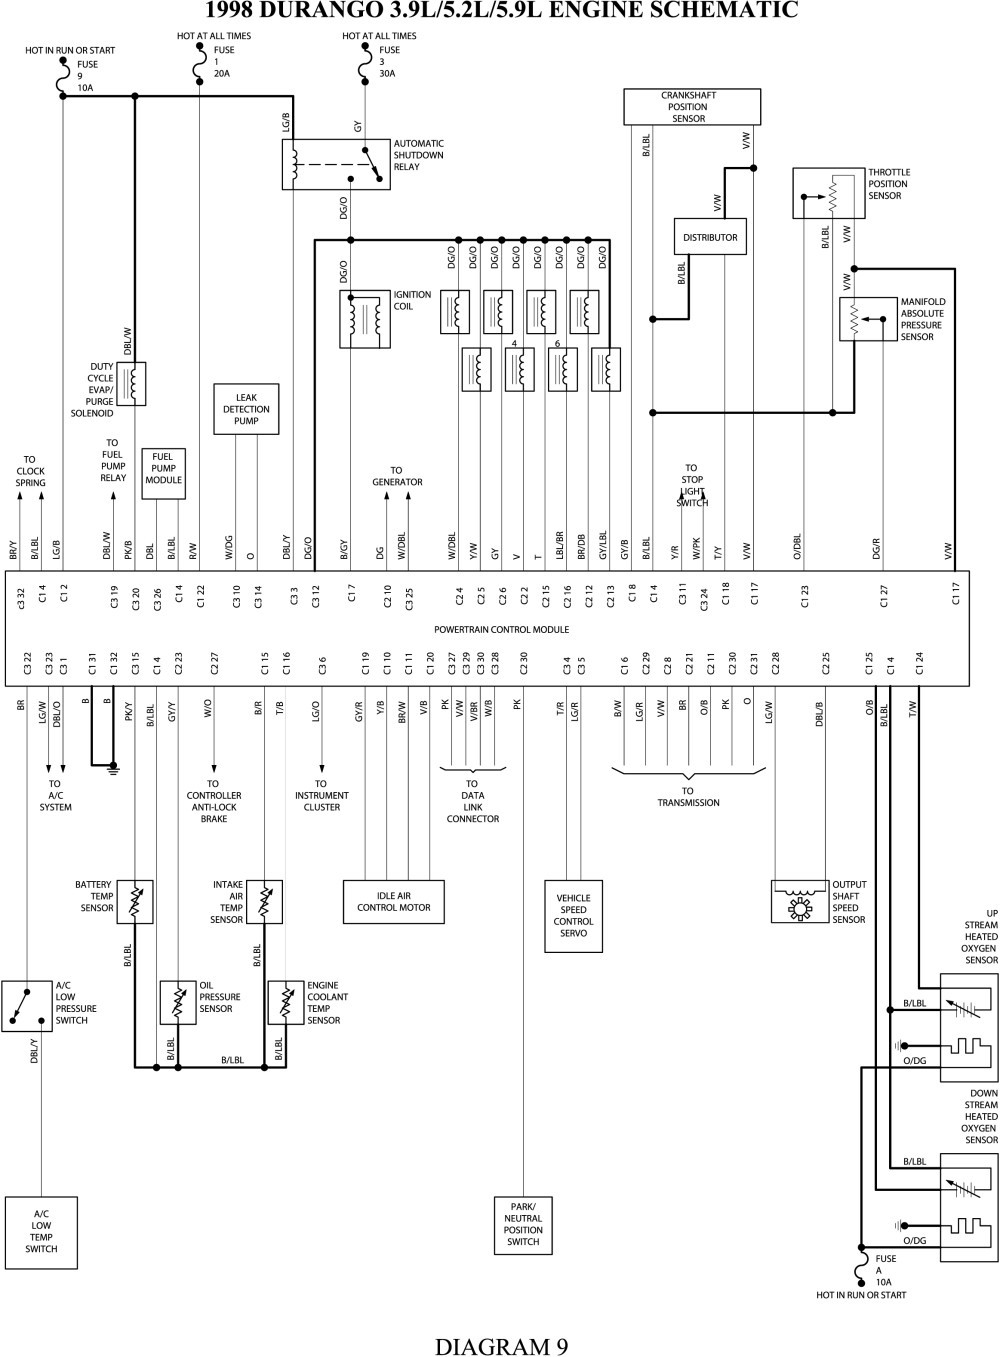 99 dodge durango wiring diagram Collection 1997 dodge dakota distributor wiring diagram wiring data rh